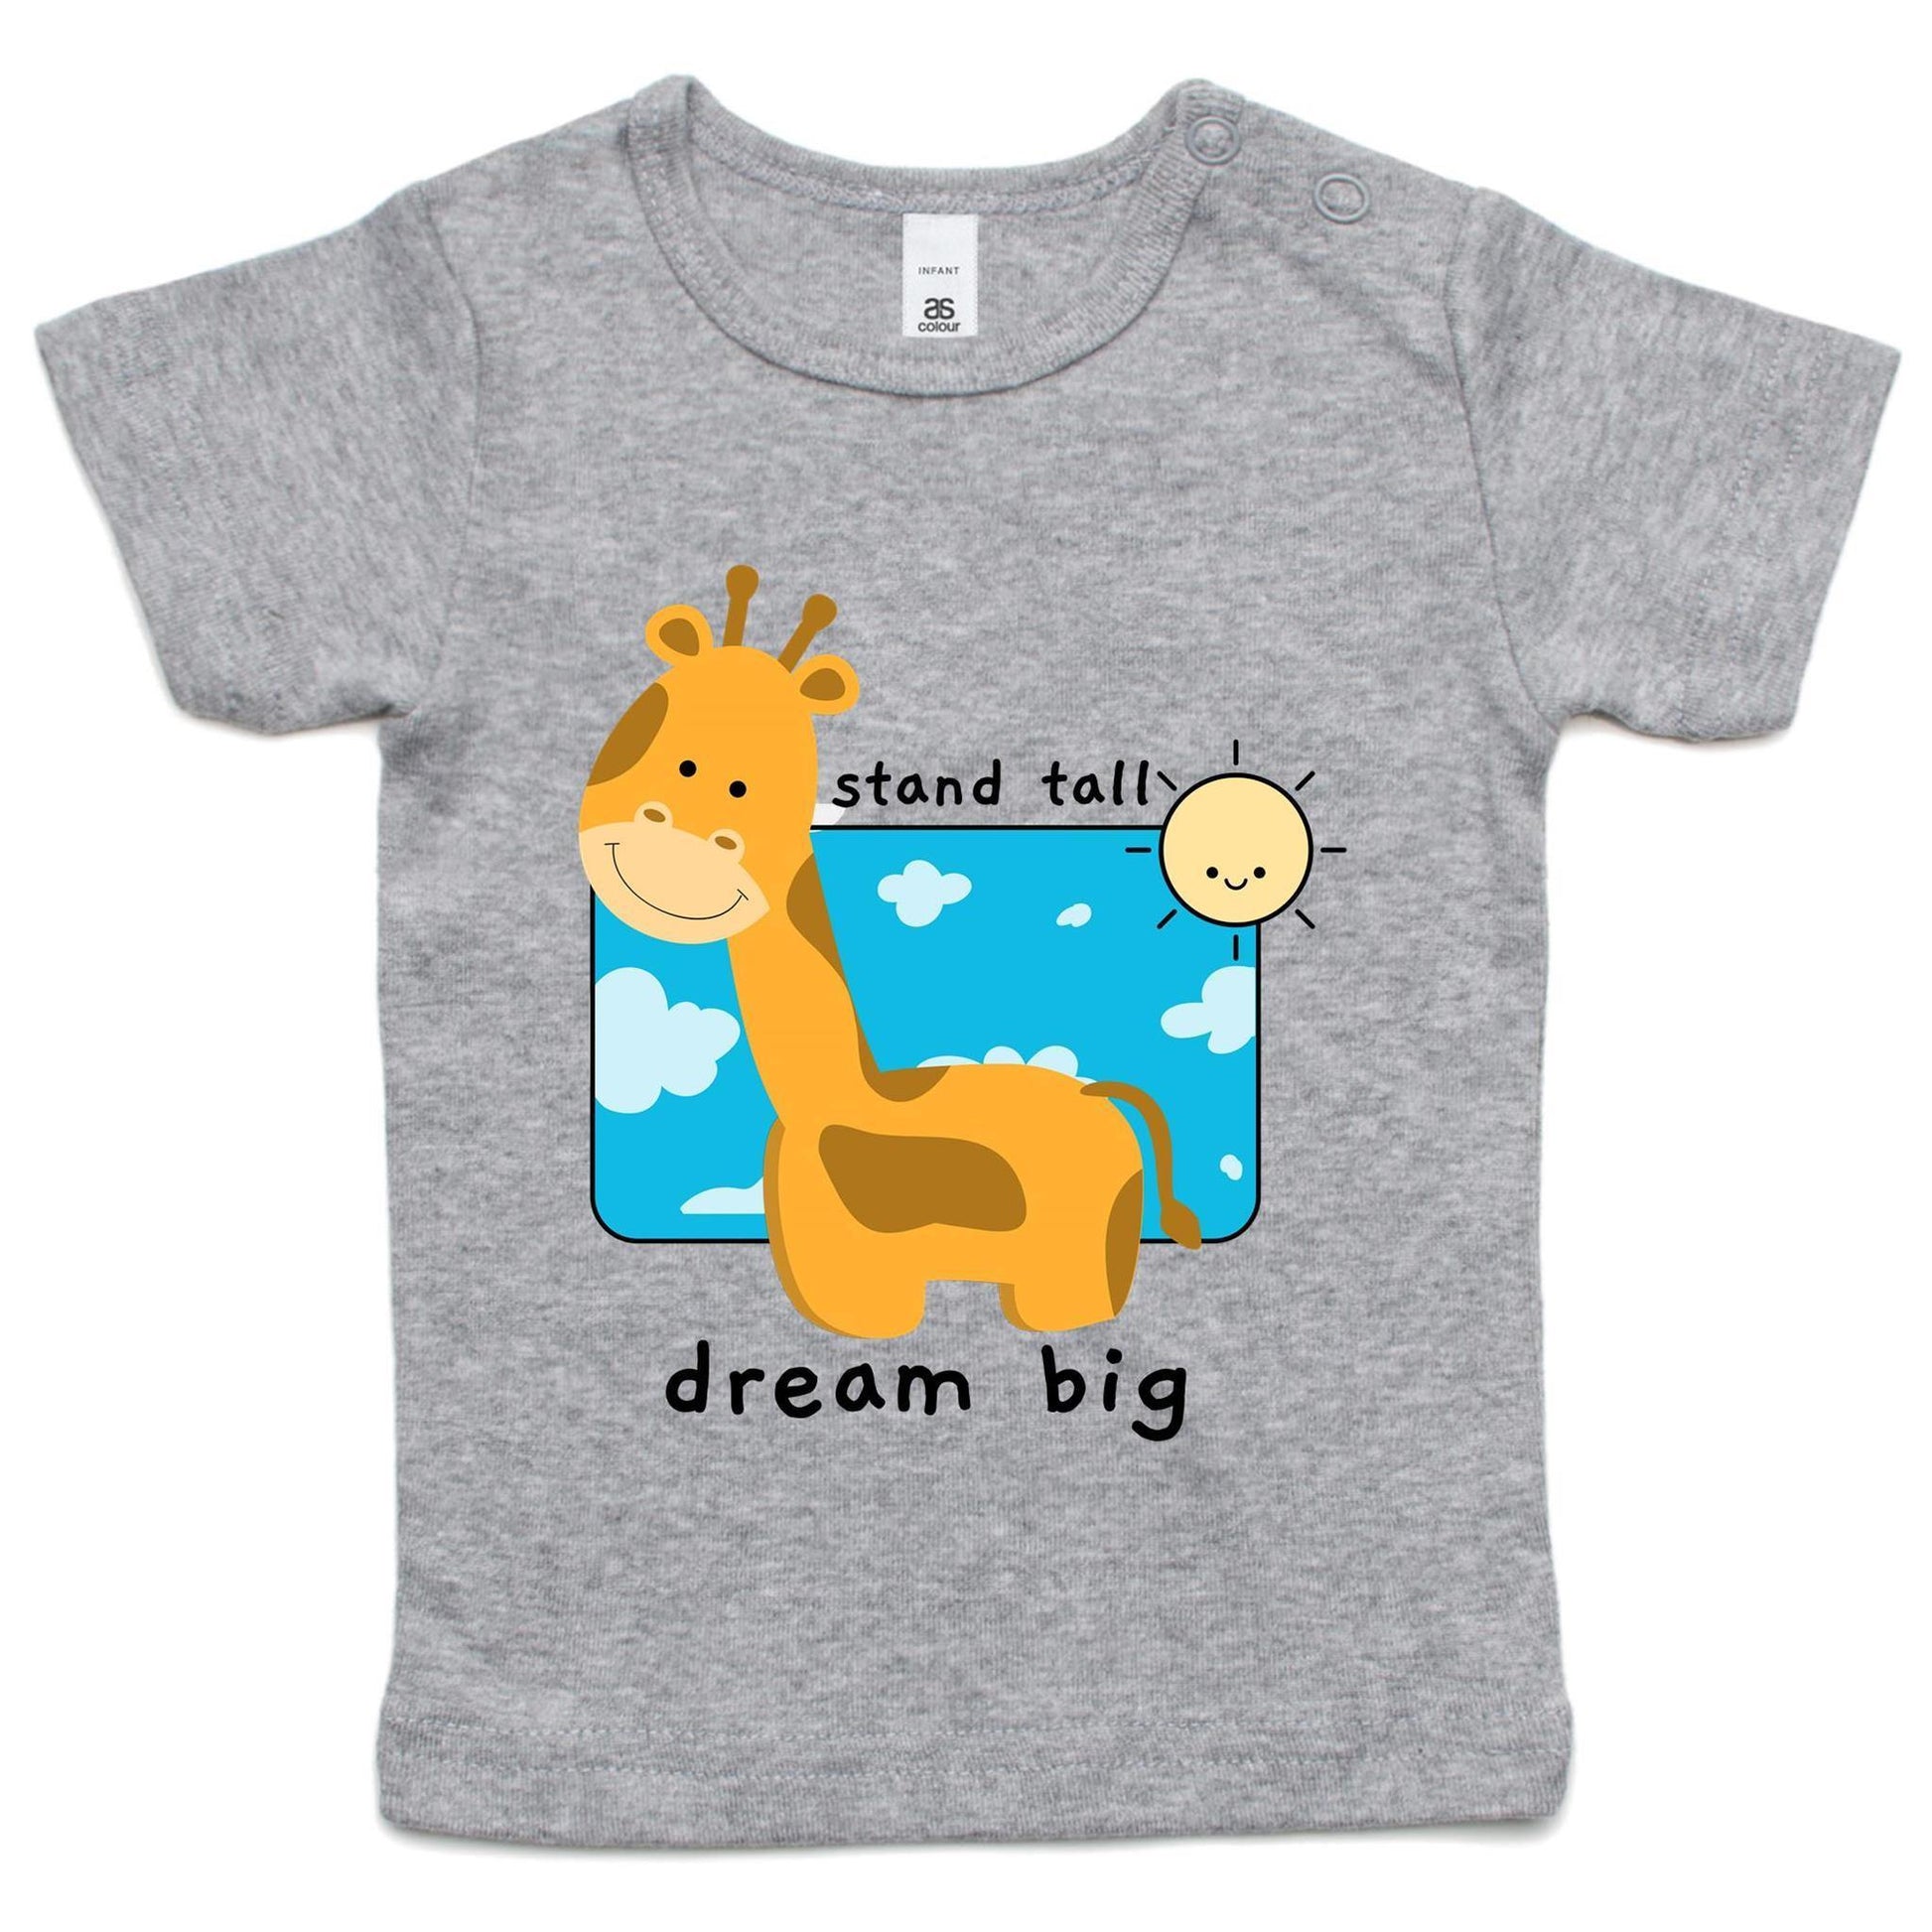 Stand Tall, Dream Big - Baby T-shirt Grey Marle Baby T-shirt animal kids